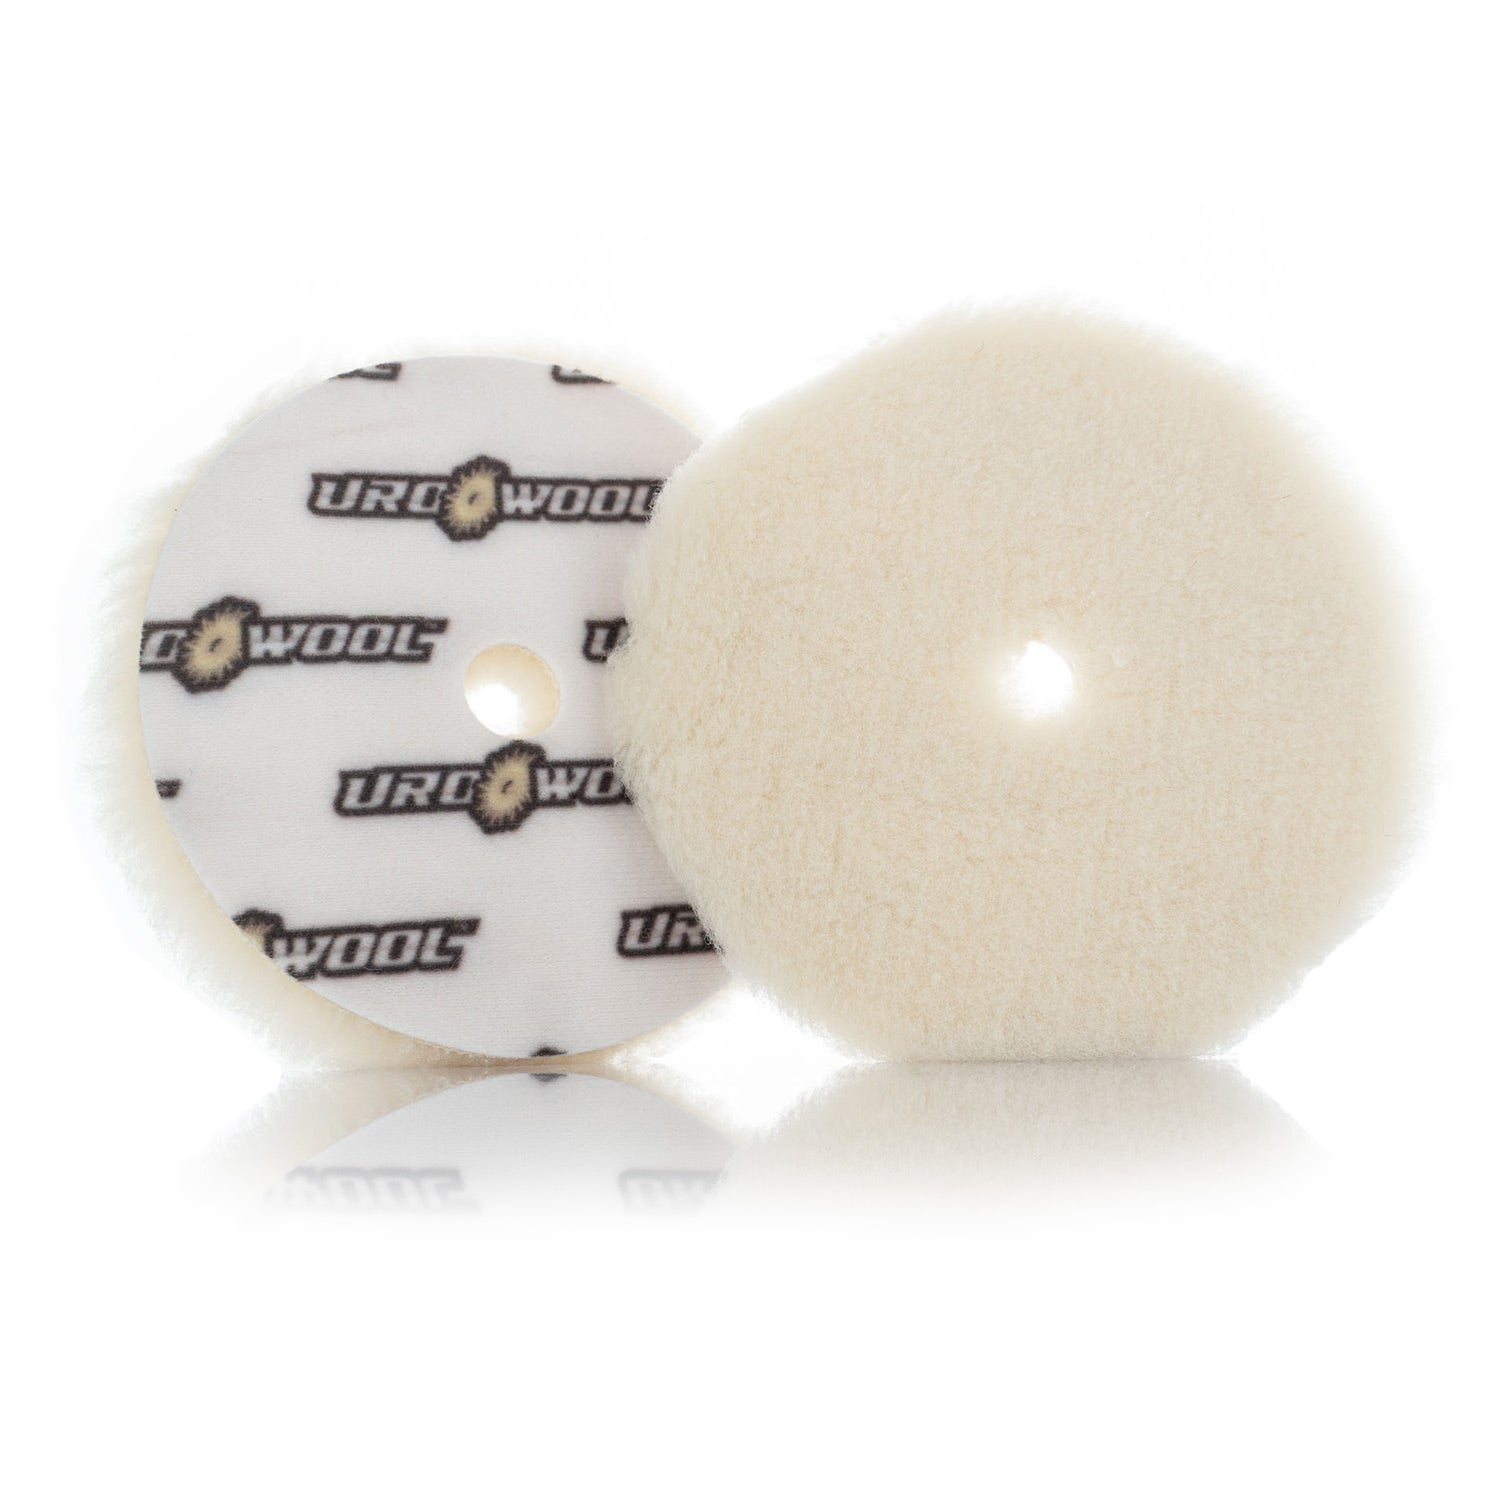 buff-and-shine-uro-wool-6-inch-buffing-pads